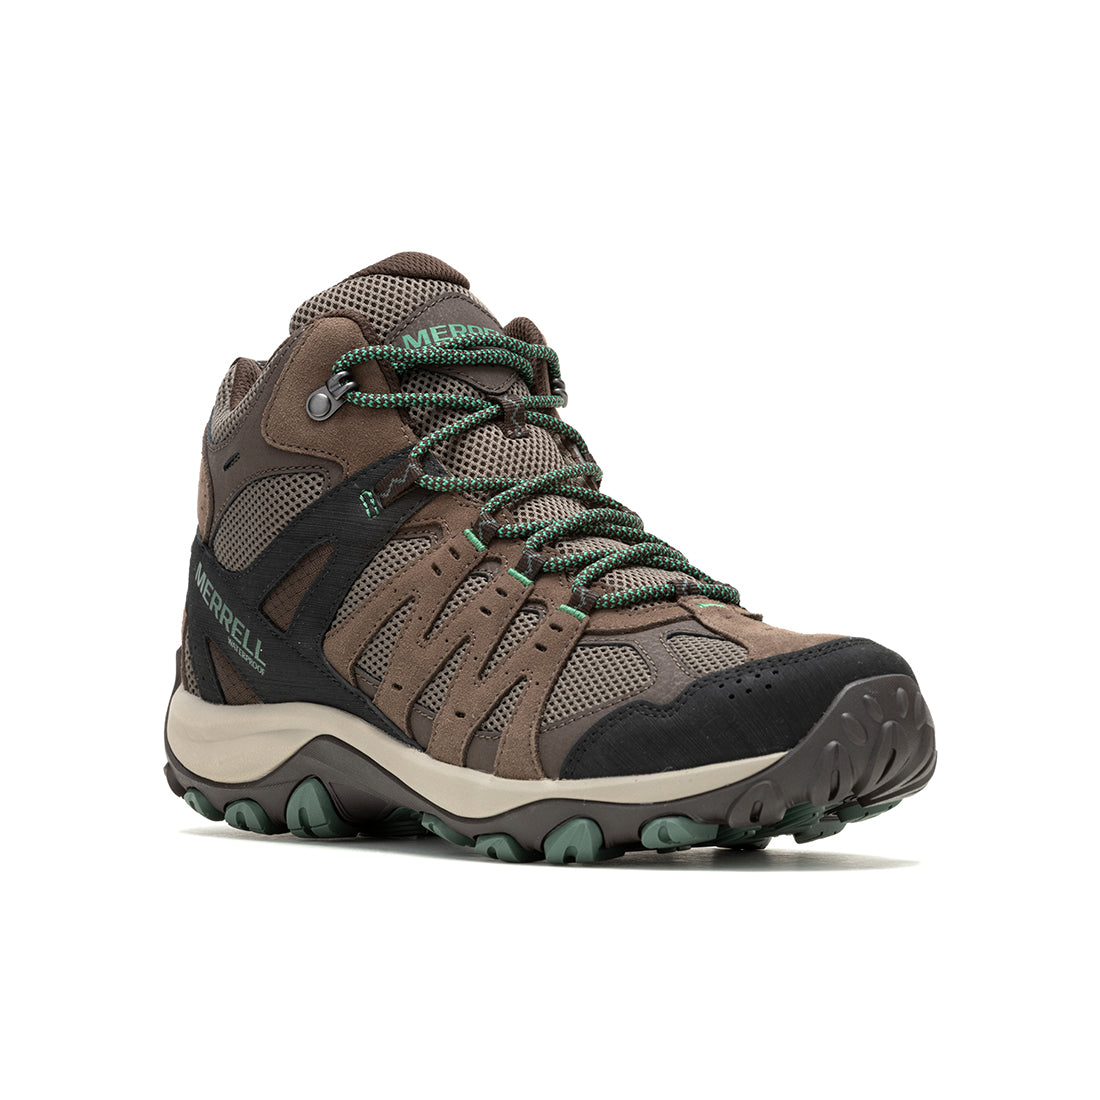 Accentor 3 Mid Waterproof - Bracken Mens Hiking Shoes | Merrell Online ...